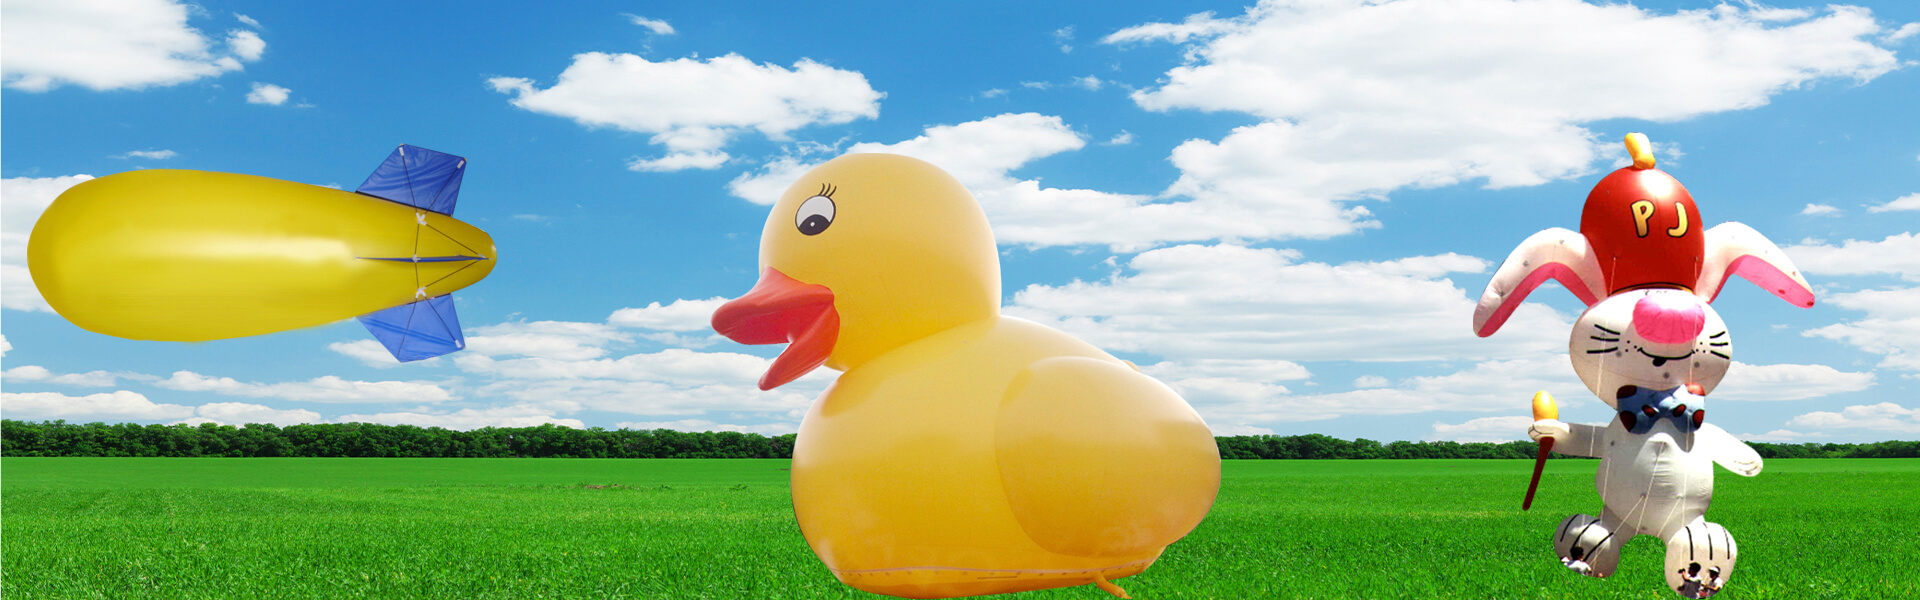 廣告氣球duck-balloon-rabbit-balloon-blimp